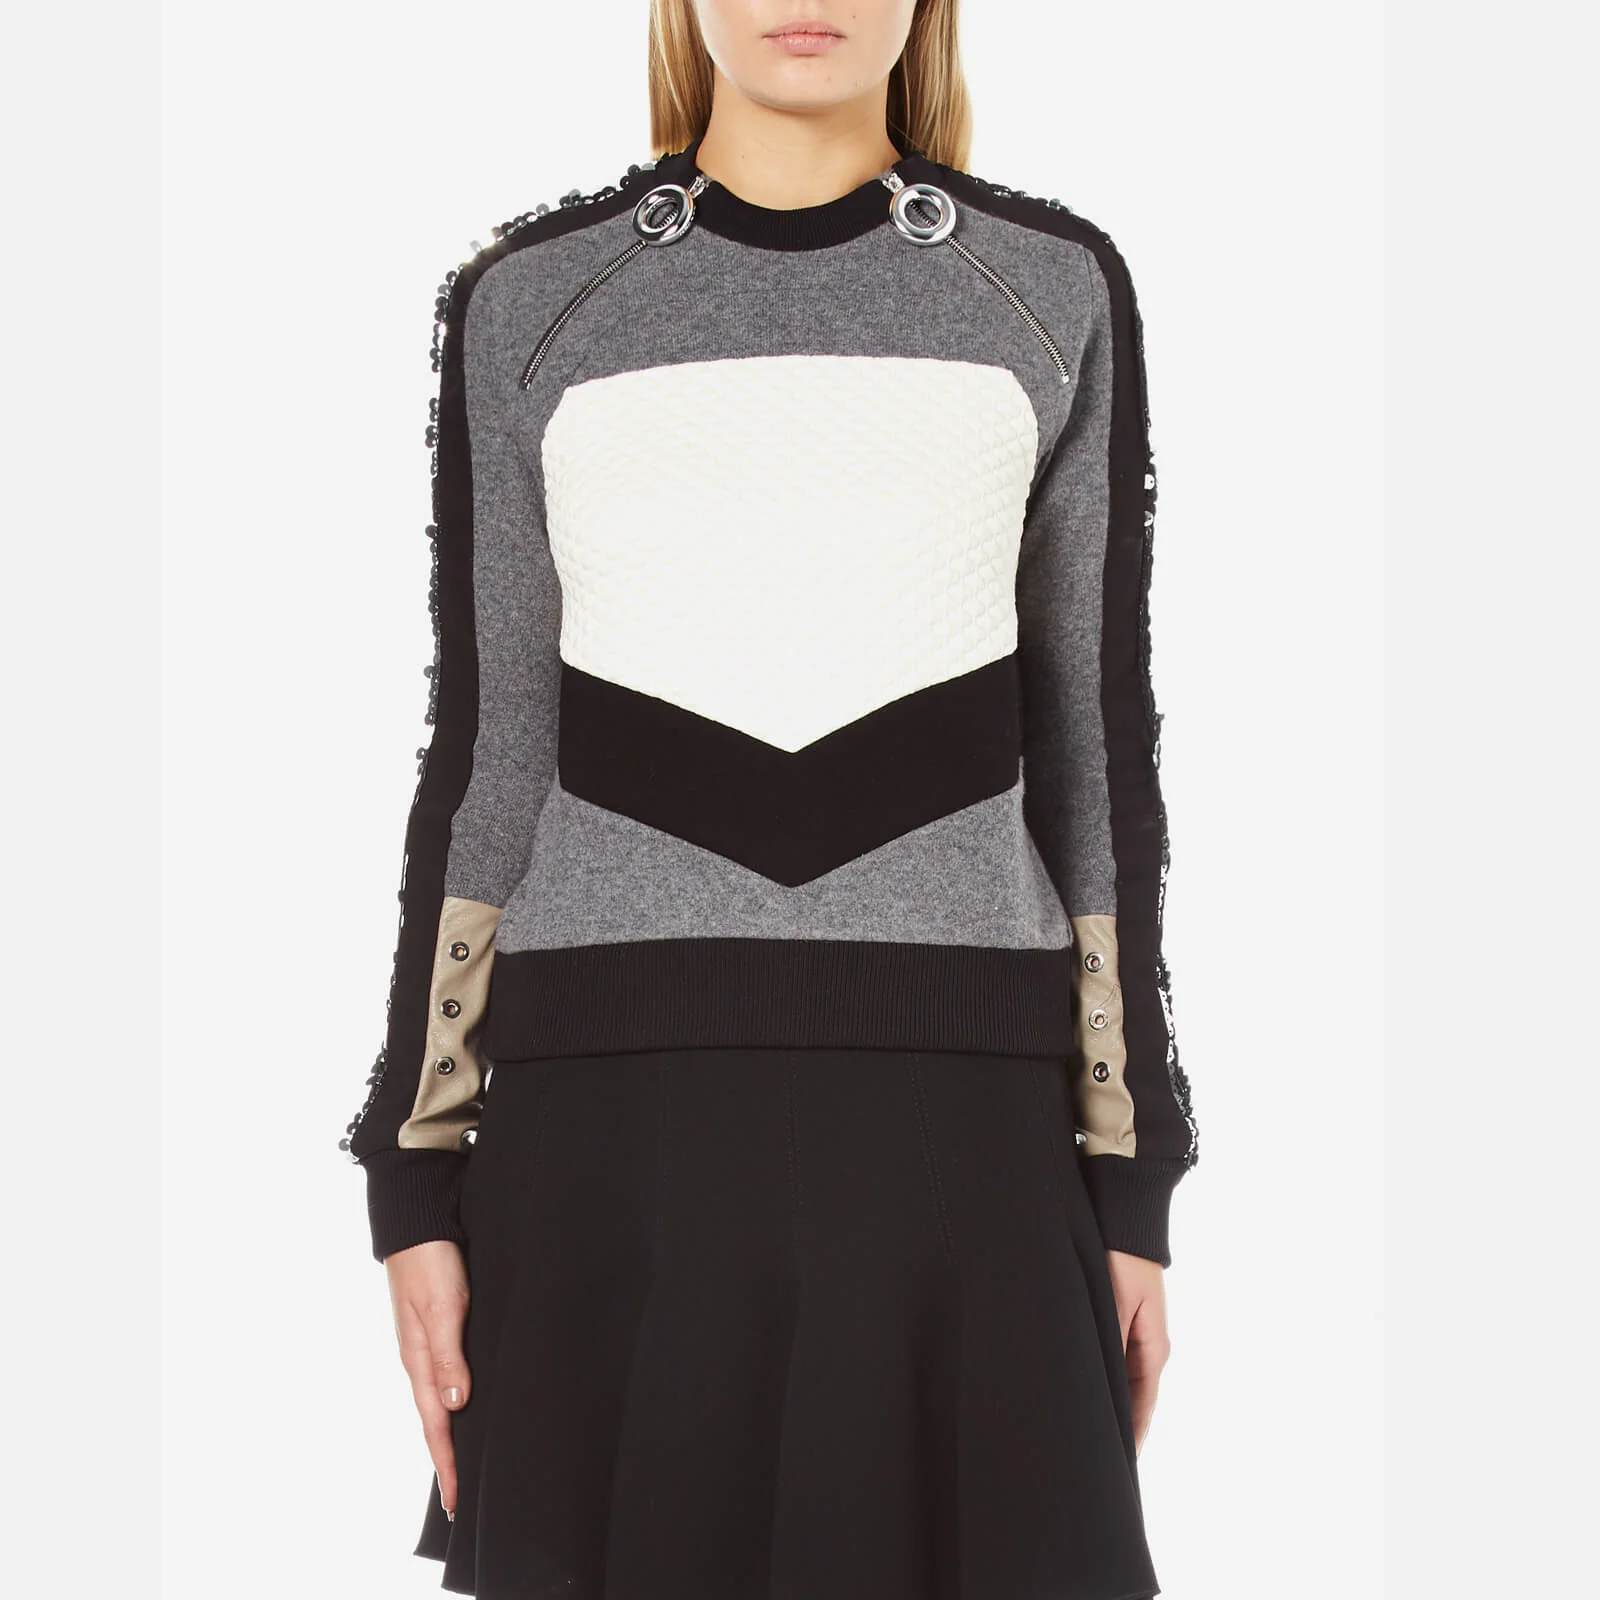 Carven Women's Zip Pull Neck Sweatshirt with Sequin Sleeves - Grey/Black/White Image 1